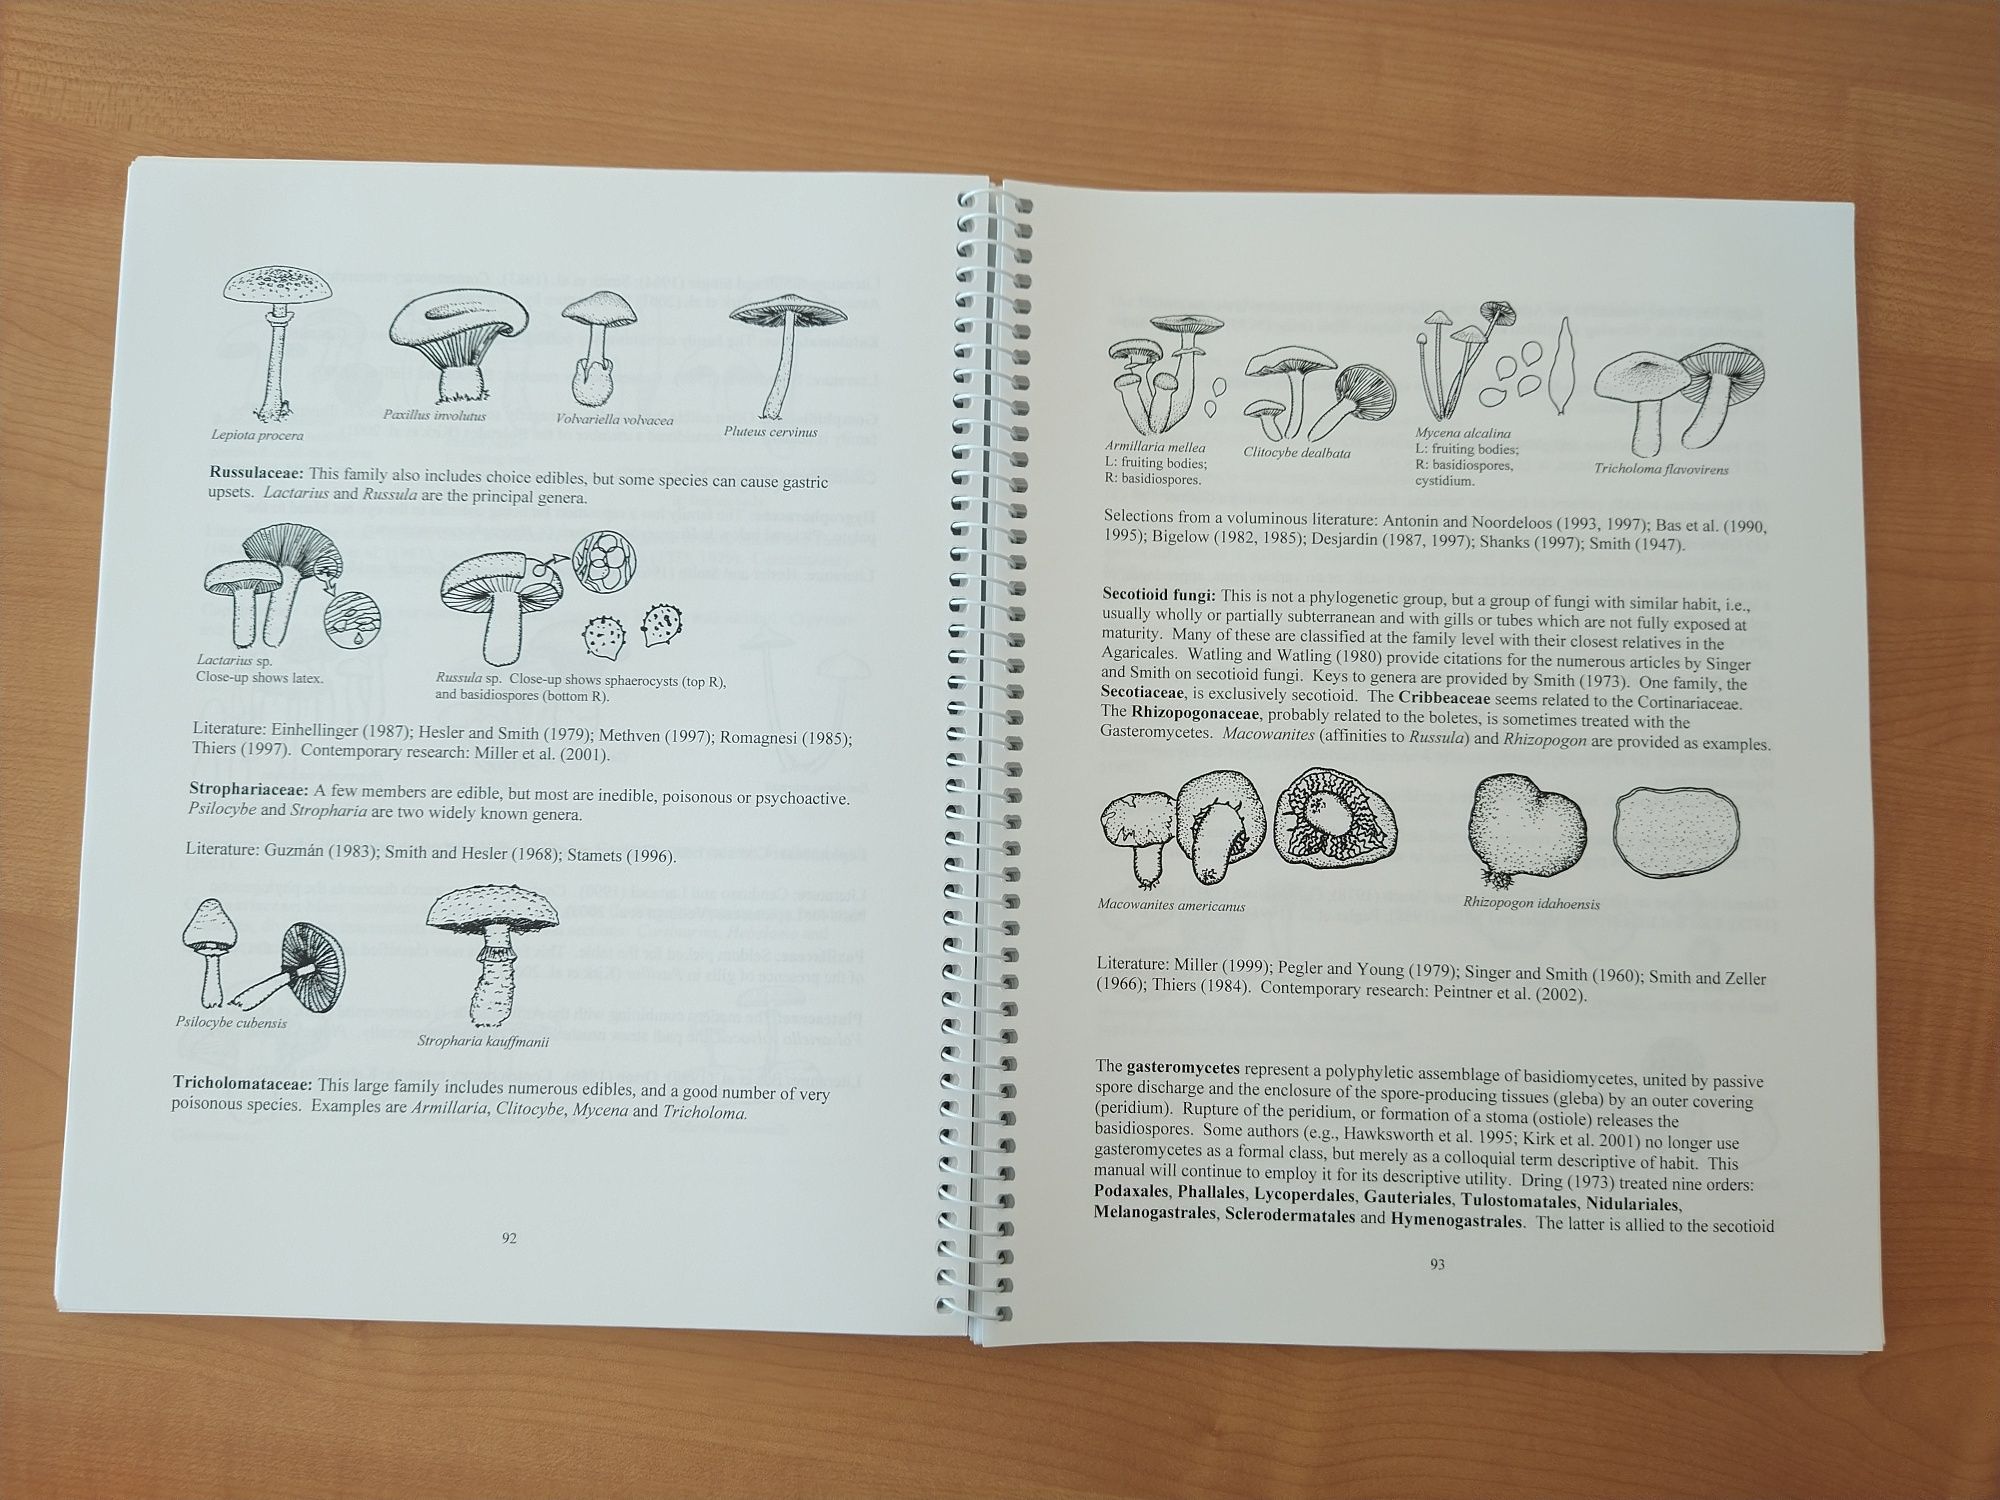 Frank M. Dugan
The Identification of Fungi: An Illustrated Introductio